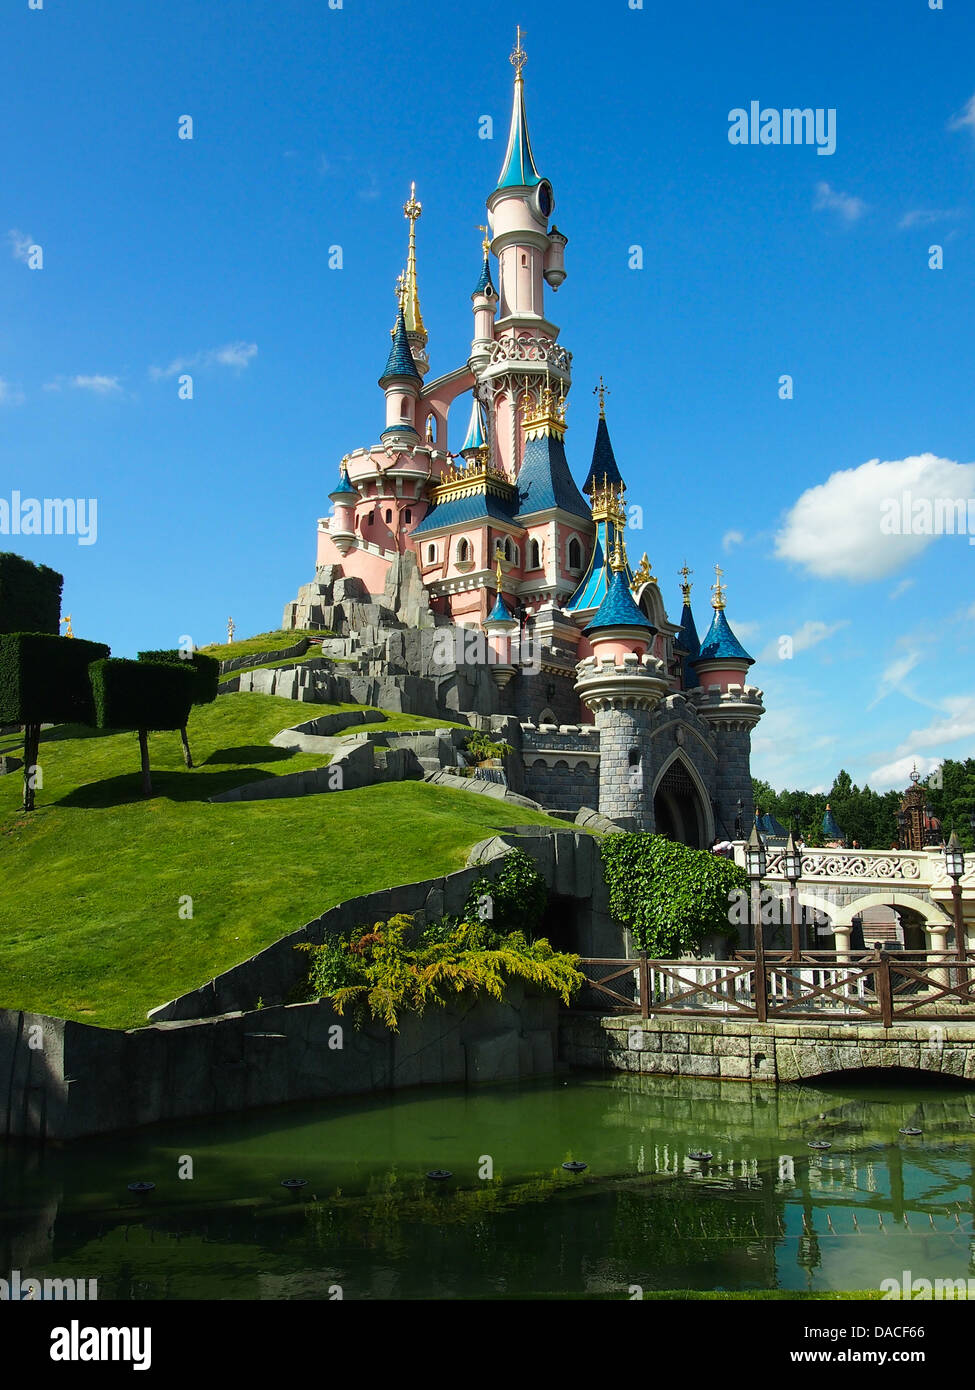 Sleeping Beauty's Castle at Disneyland Paris, France Stock Photo